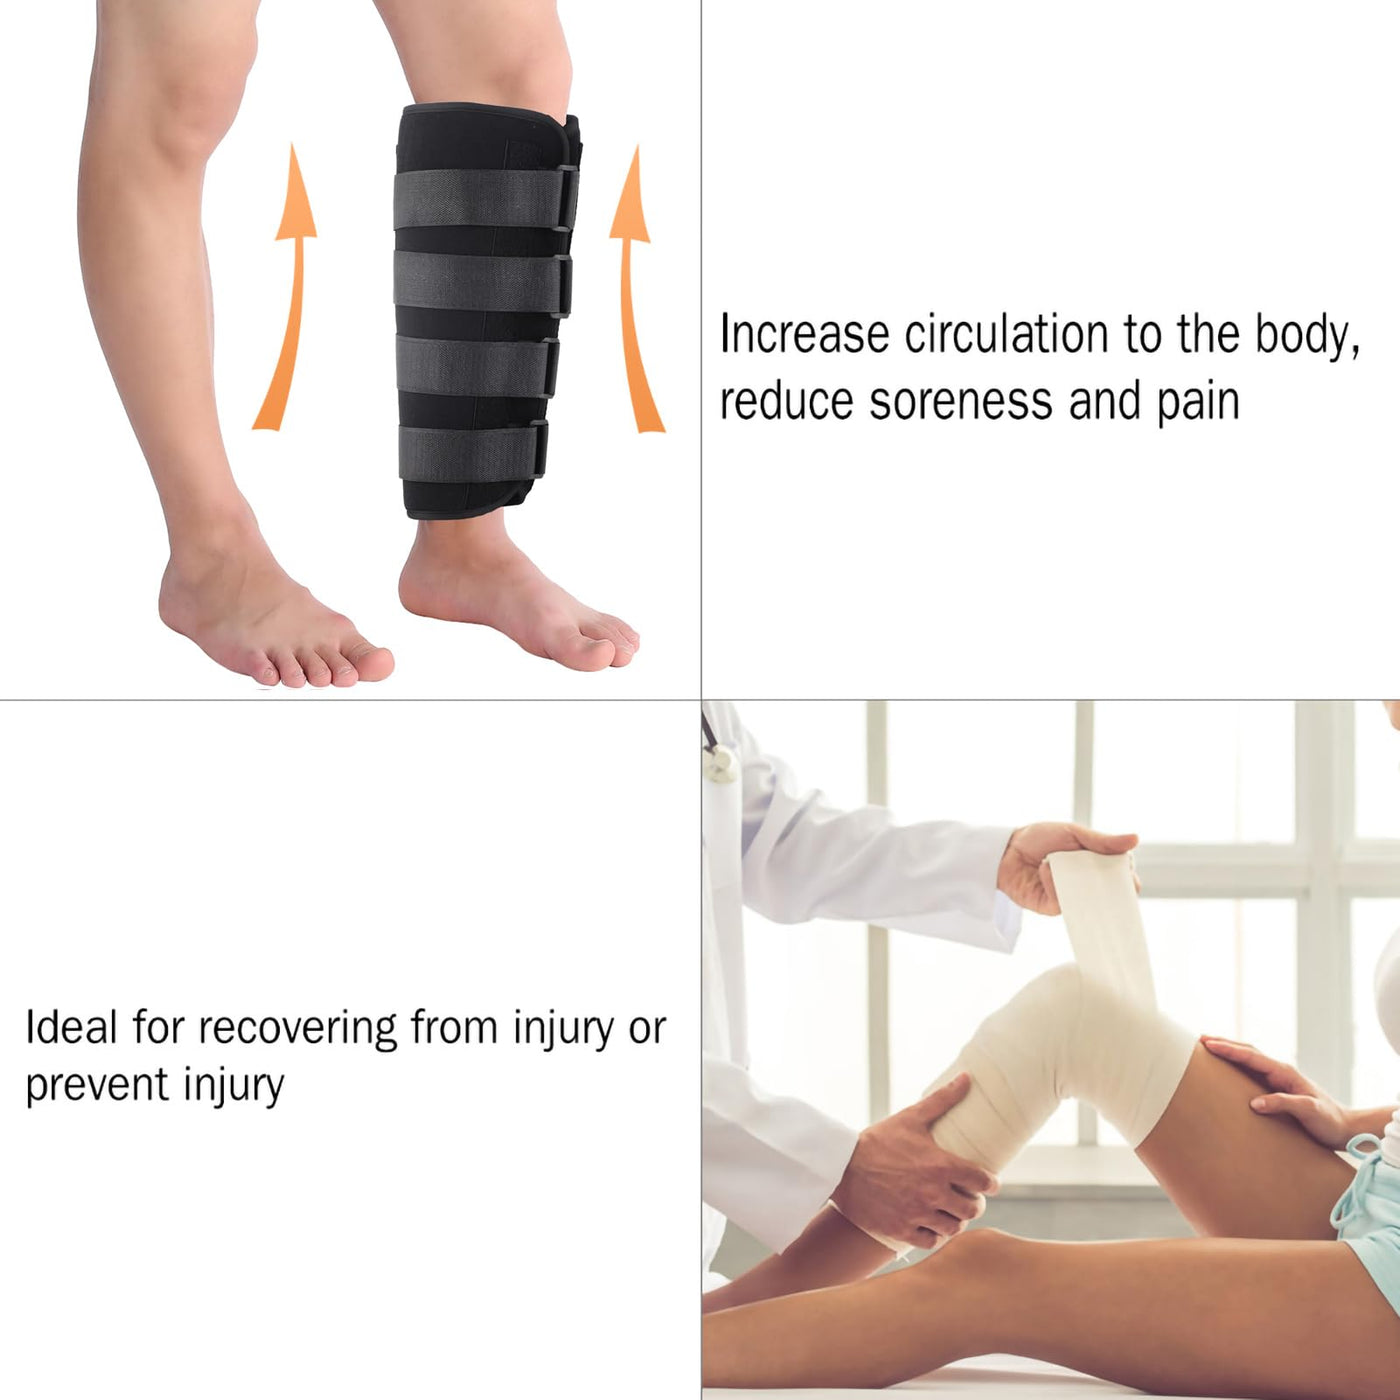  Calf Brace, Shin Splint Support Lower Leg Compression